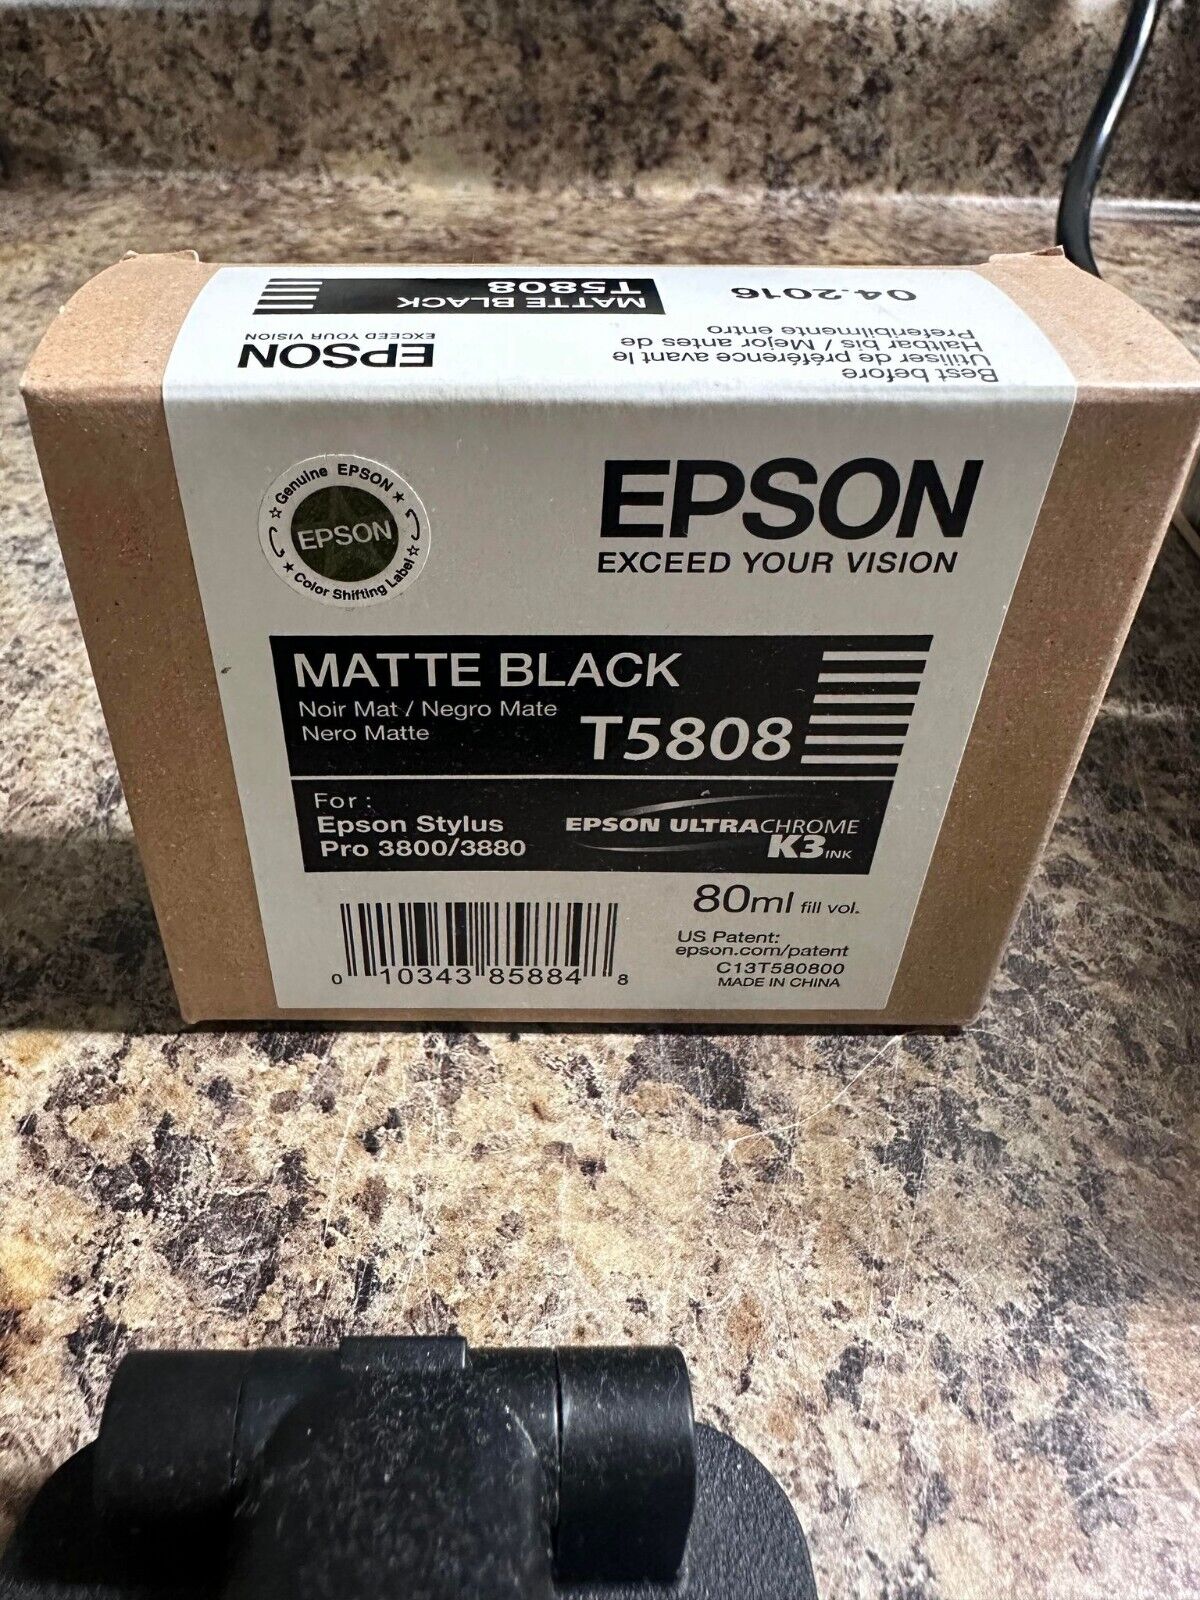 Epson T5808 Matte Black ink Cartridge for Stylus Pro 3800/3880 OEM